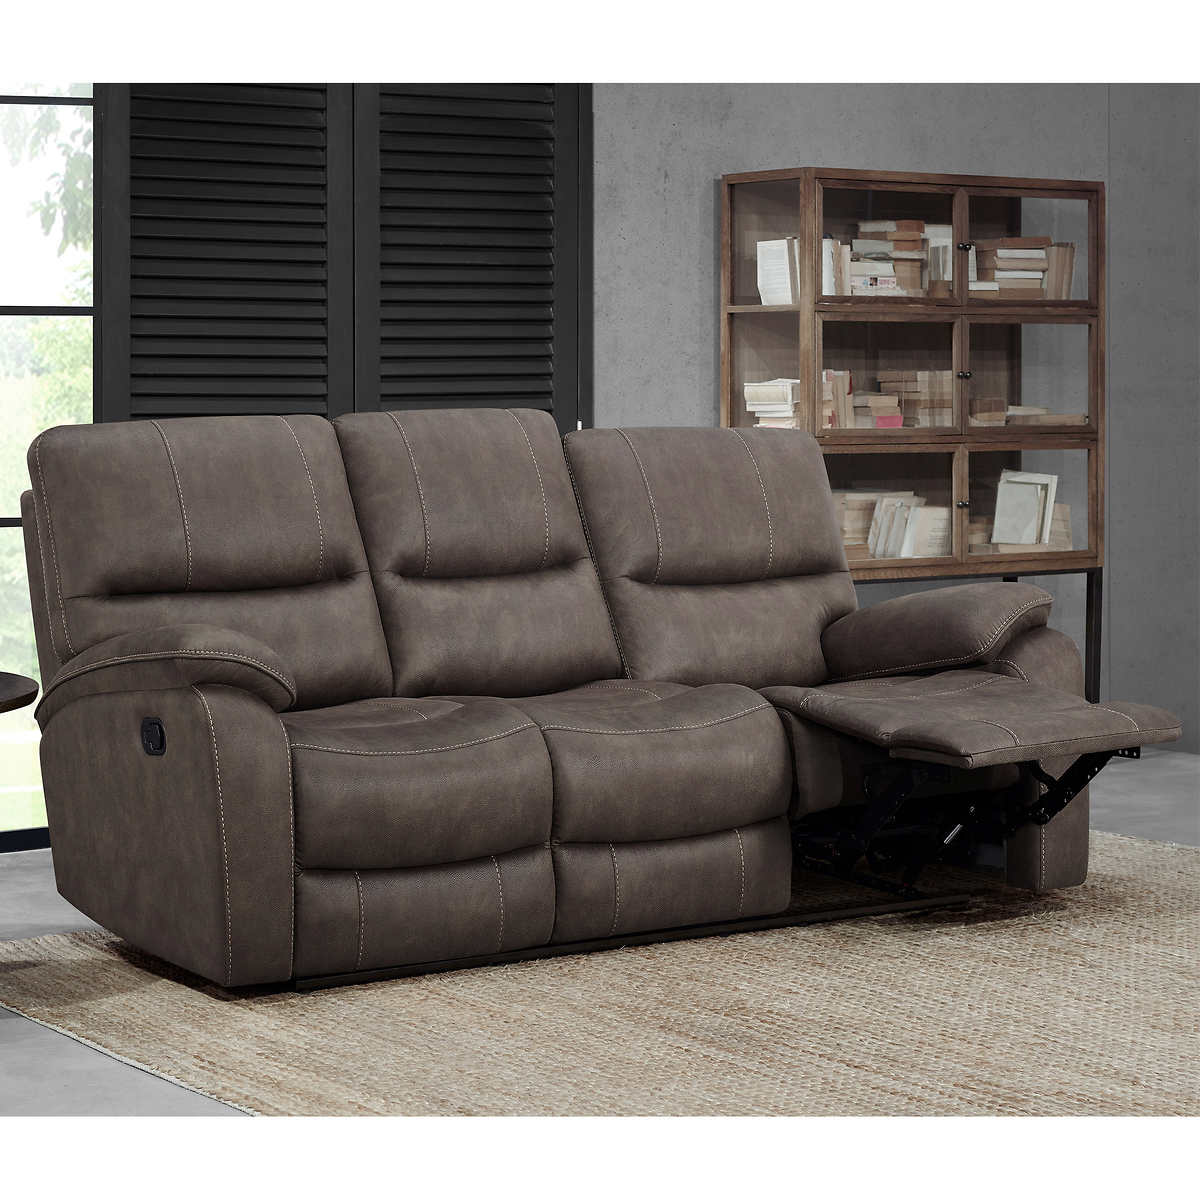 NEW - Costco - Barcalounger Henley Fabric Manual Reclining Sofa - Retail $1199